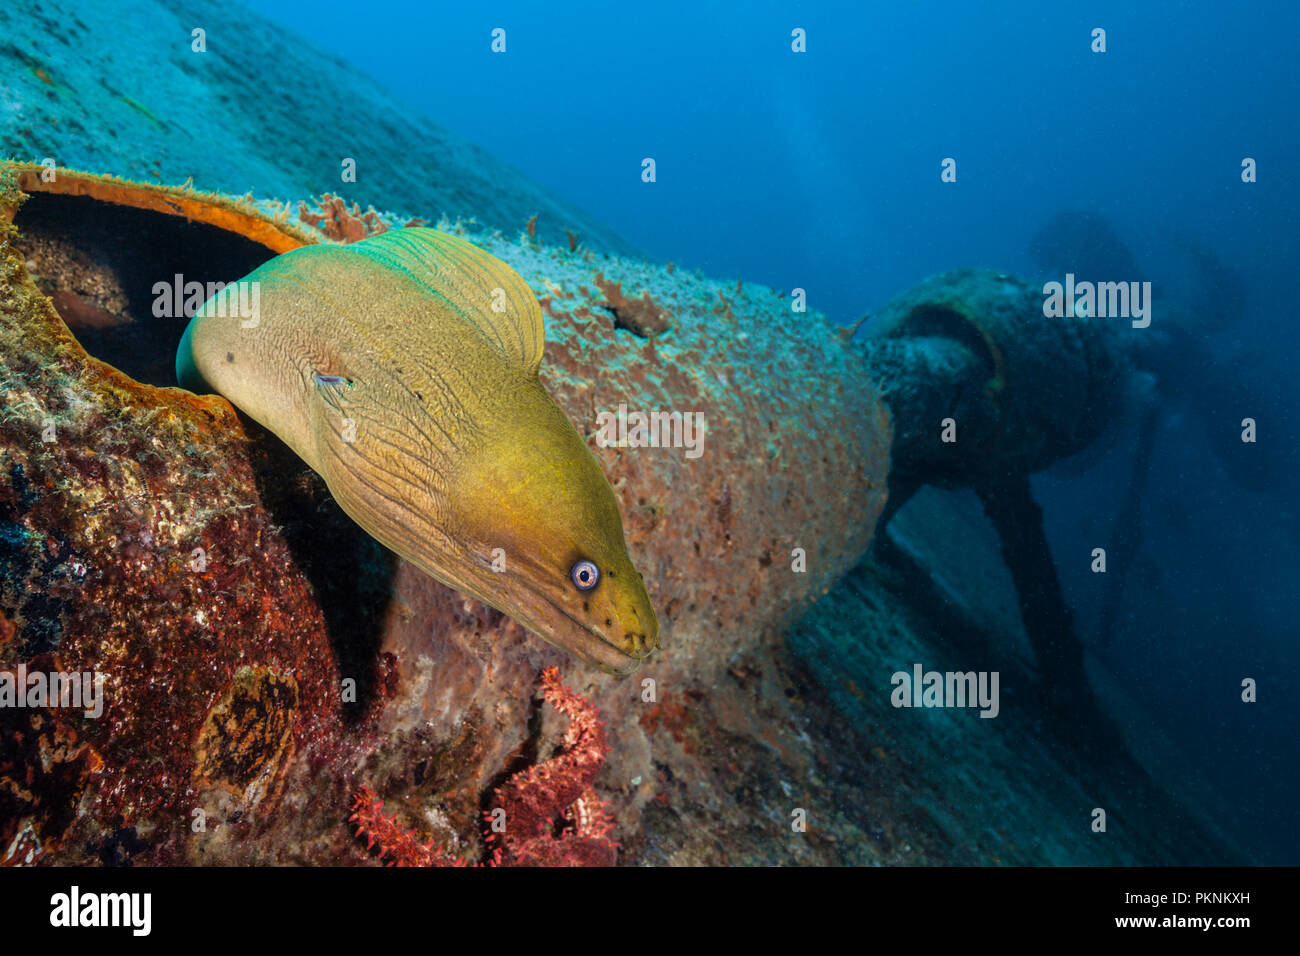 Panamic Green Moray Eel at Salvatierra Wreck, Gymnothorax castaneus, La Paz, Baja California Sur, Mexico Stock Photo